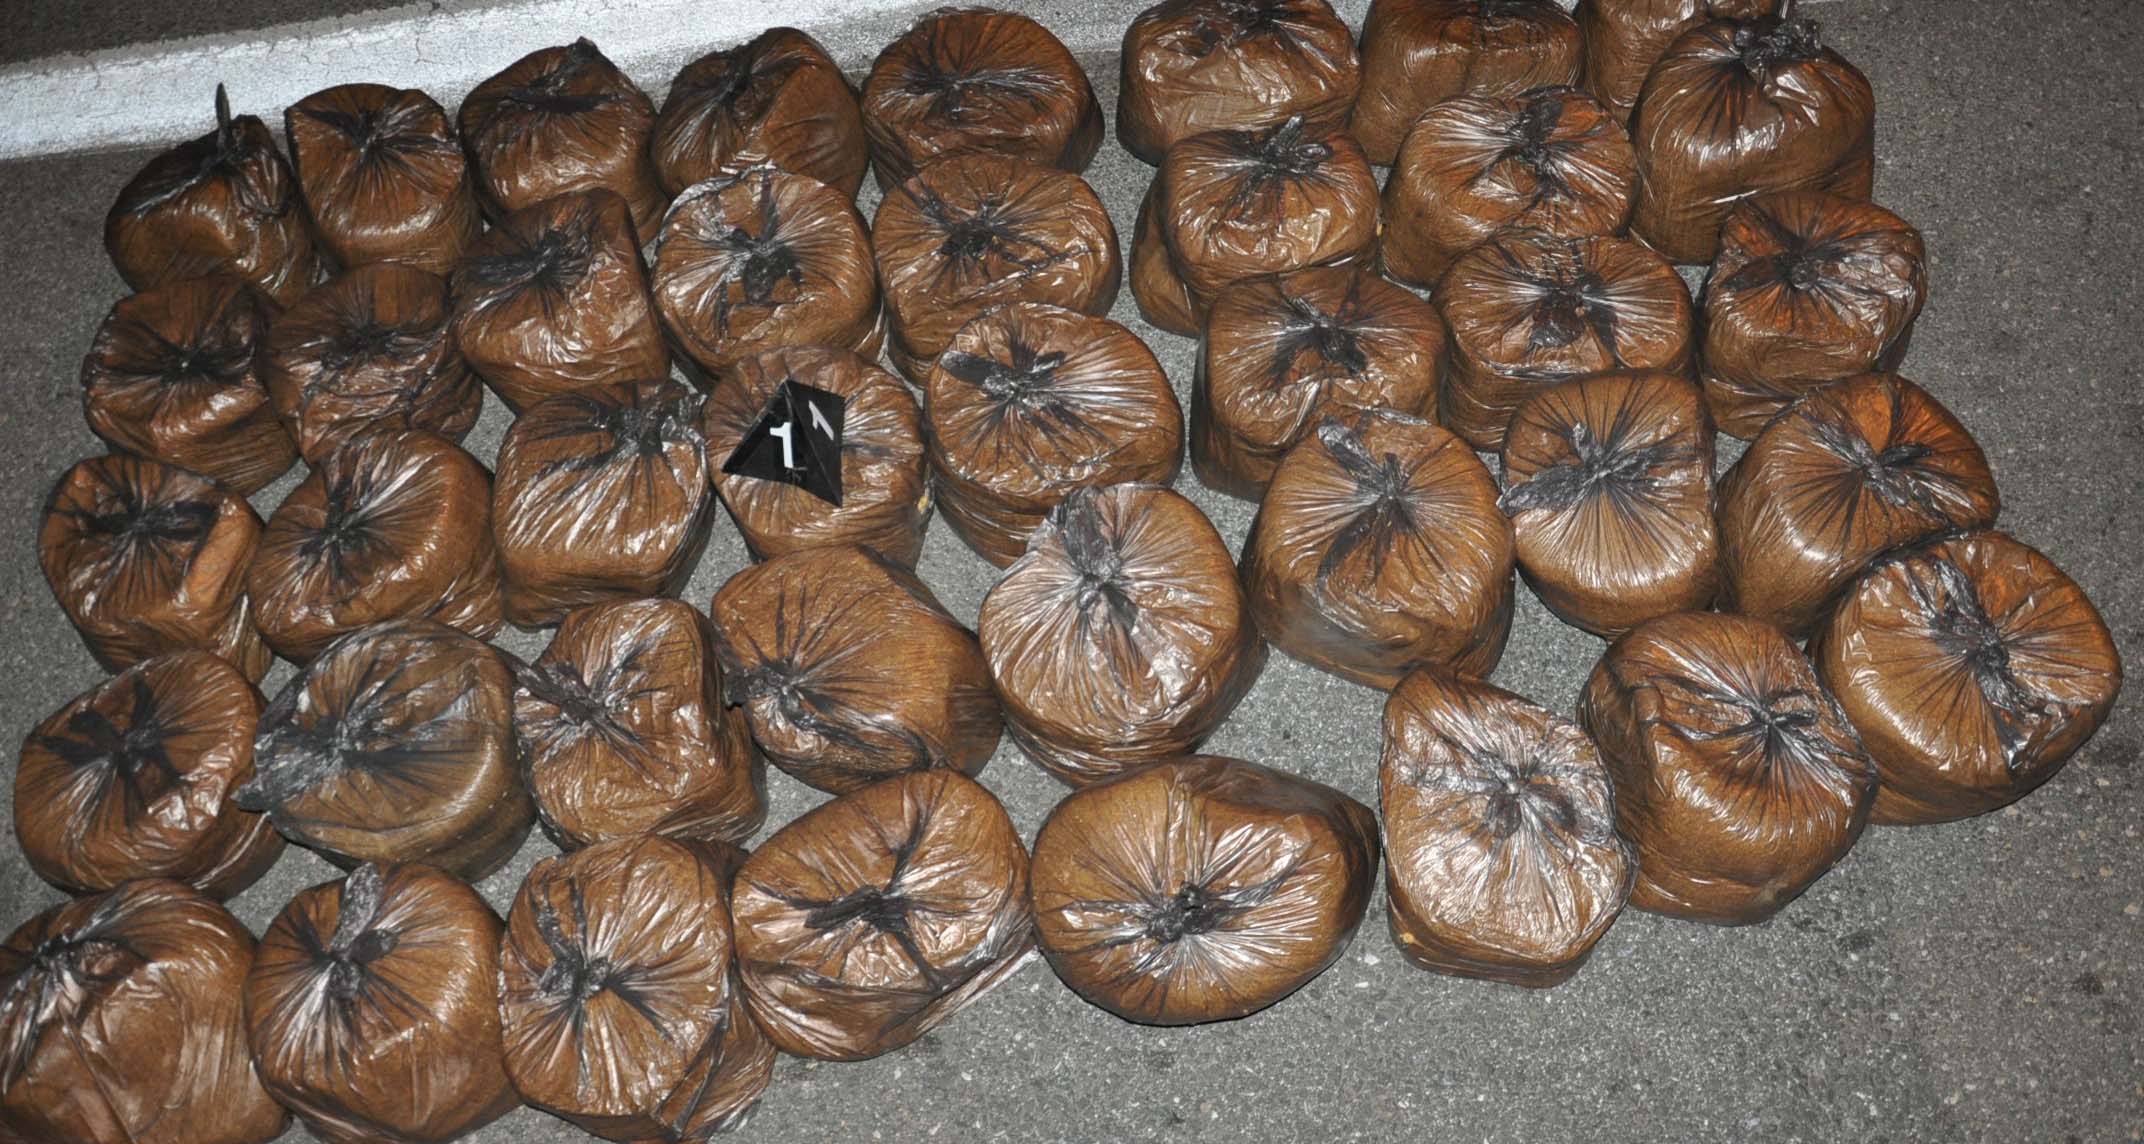 Policija zaplenila 440 kg rezanog duvana